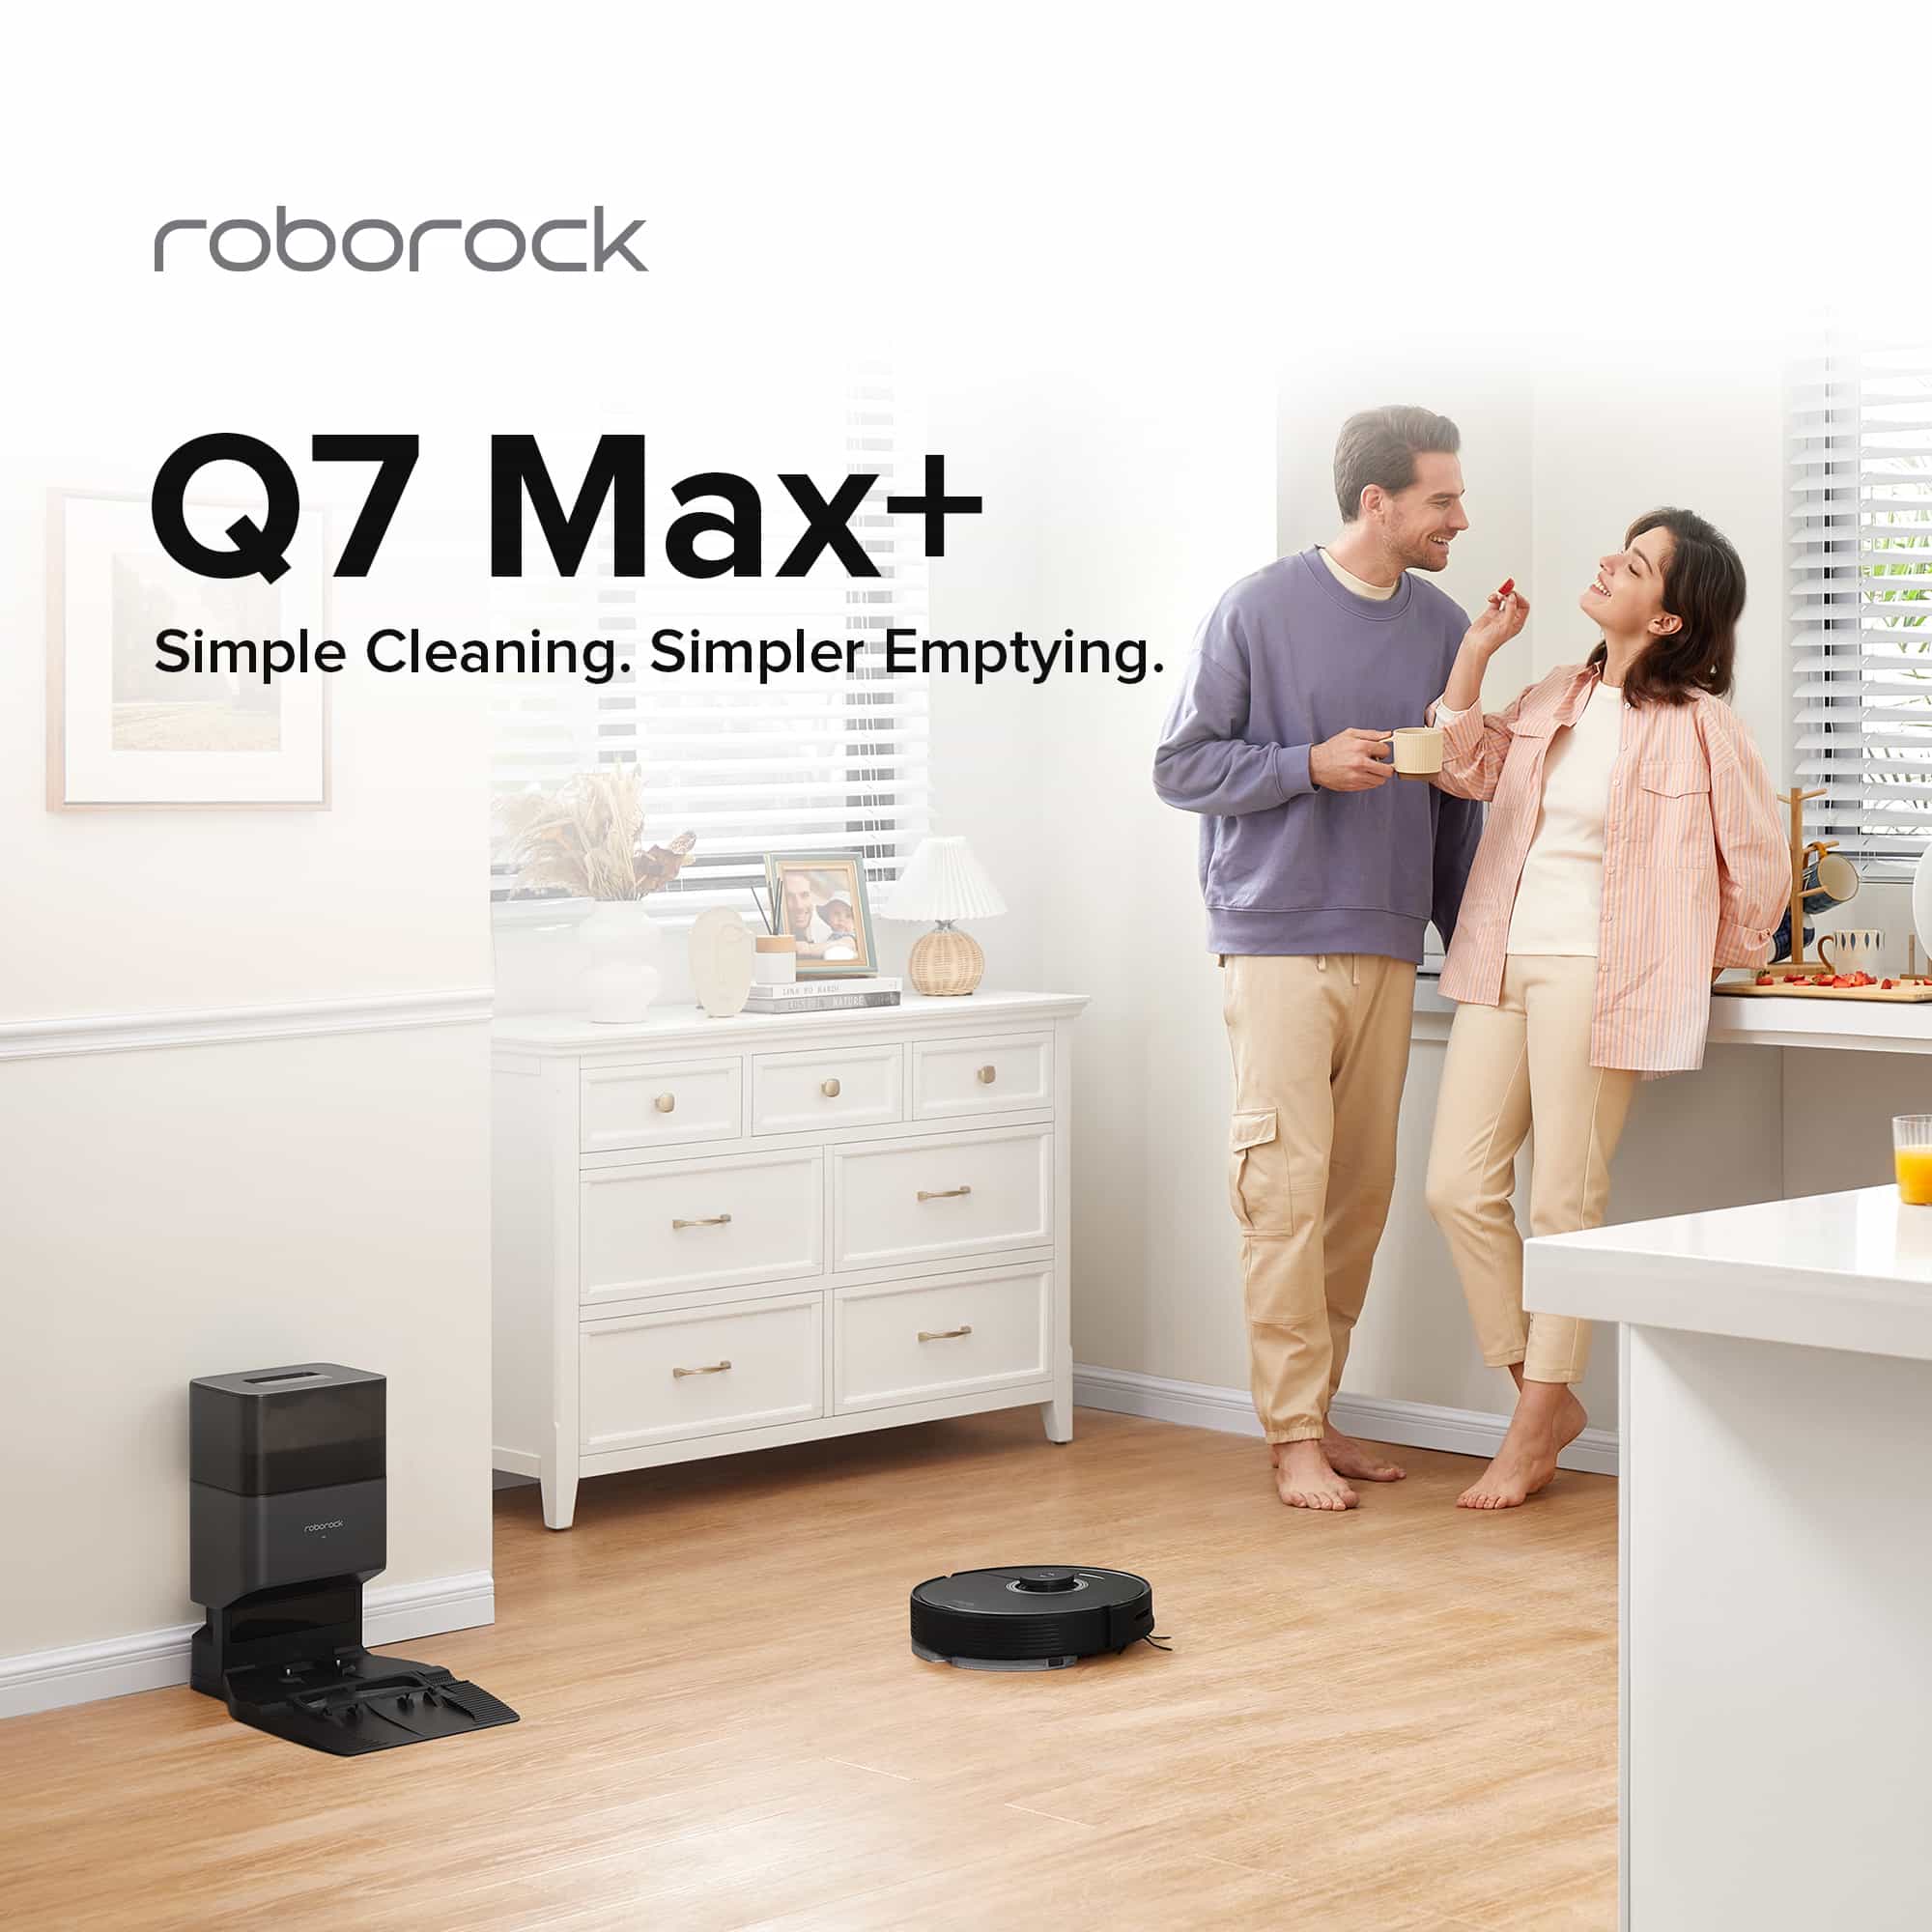  Roborock: Q7 Max